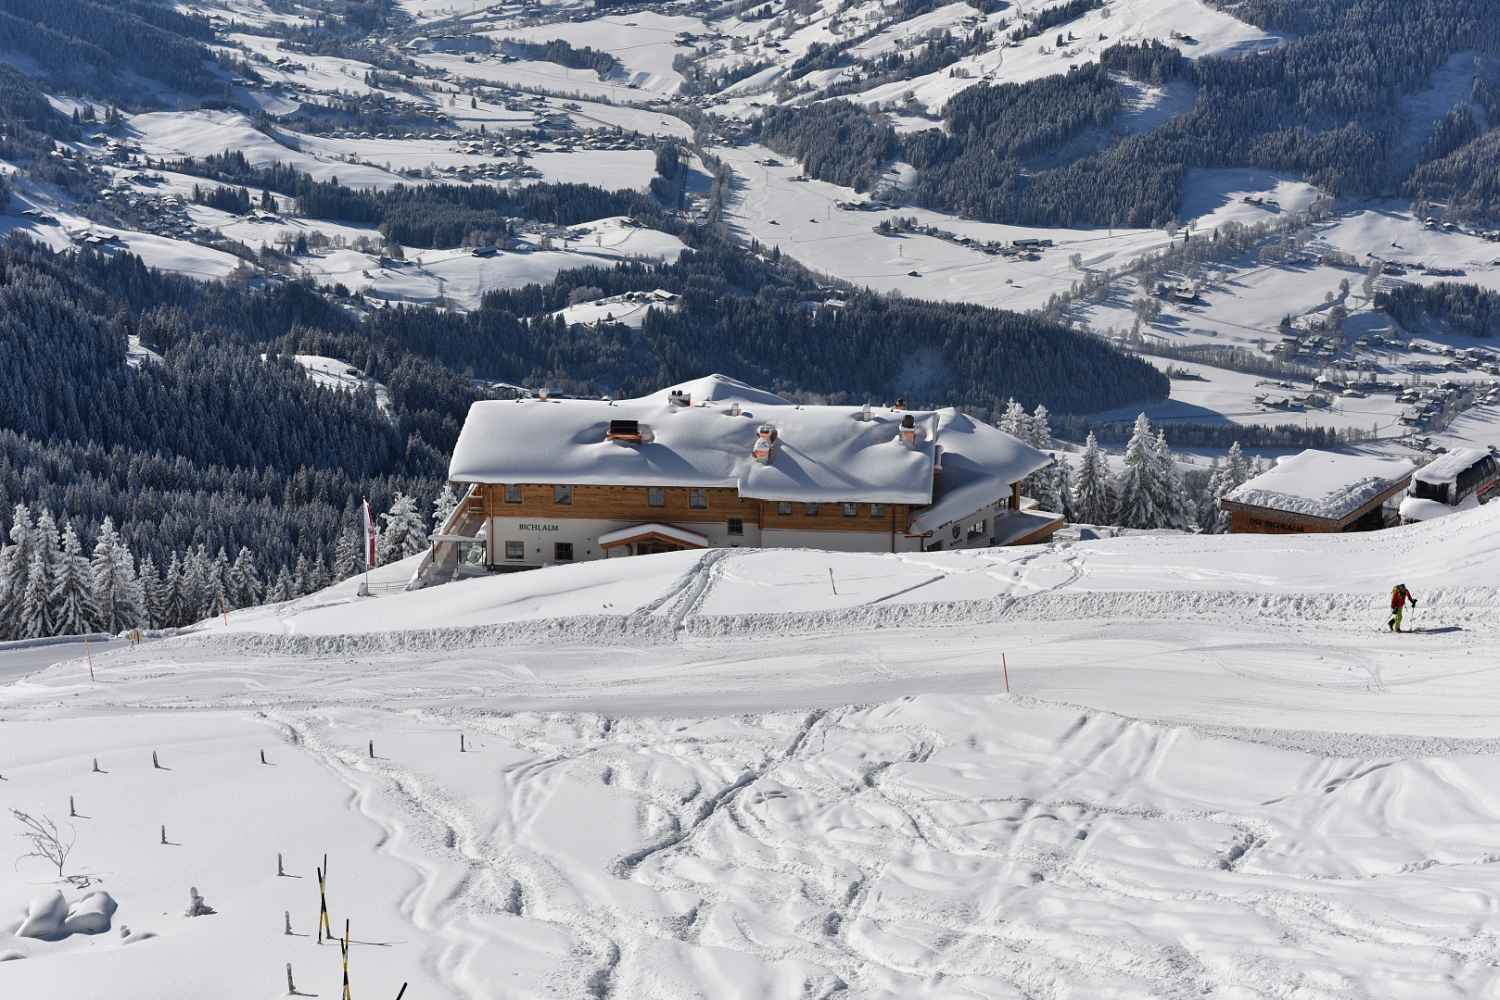 BichlAlm Kitzbuhel, Tyrol - Austria